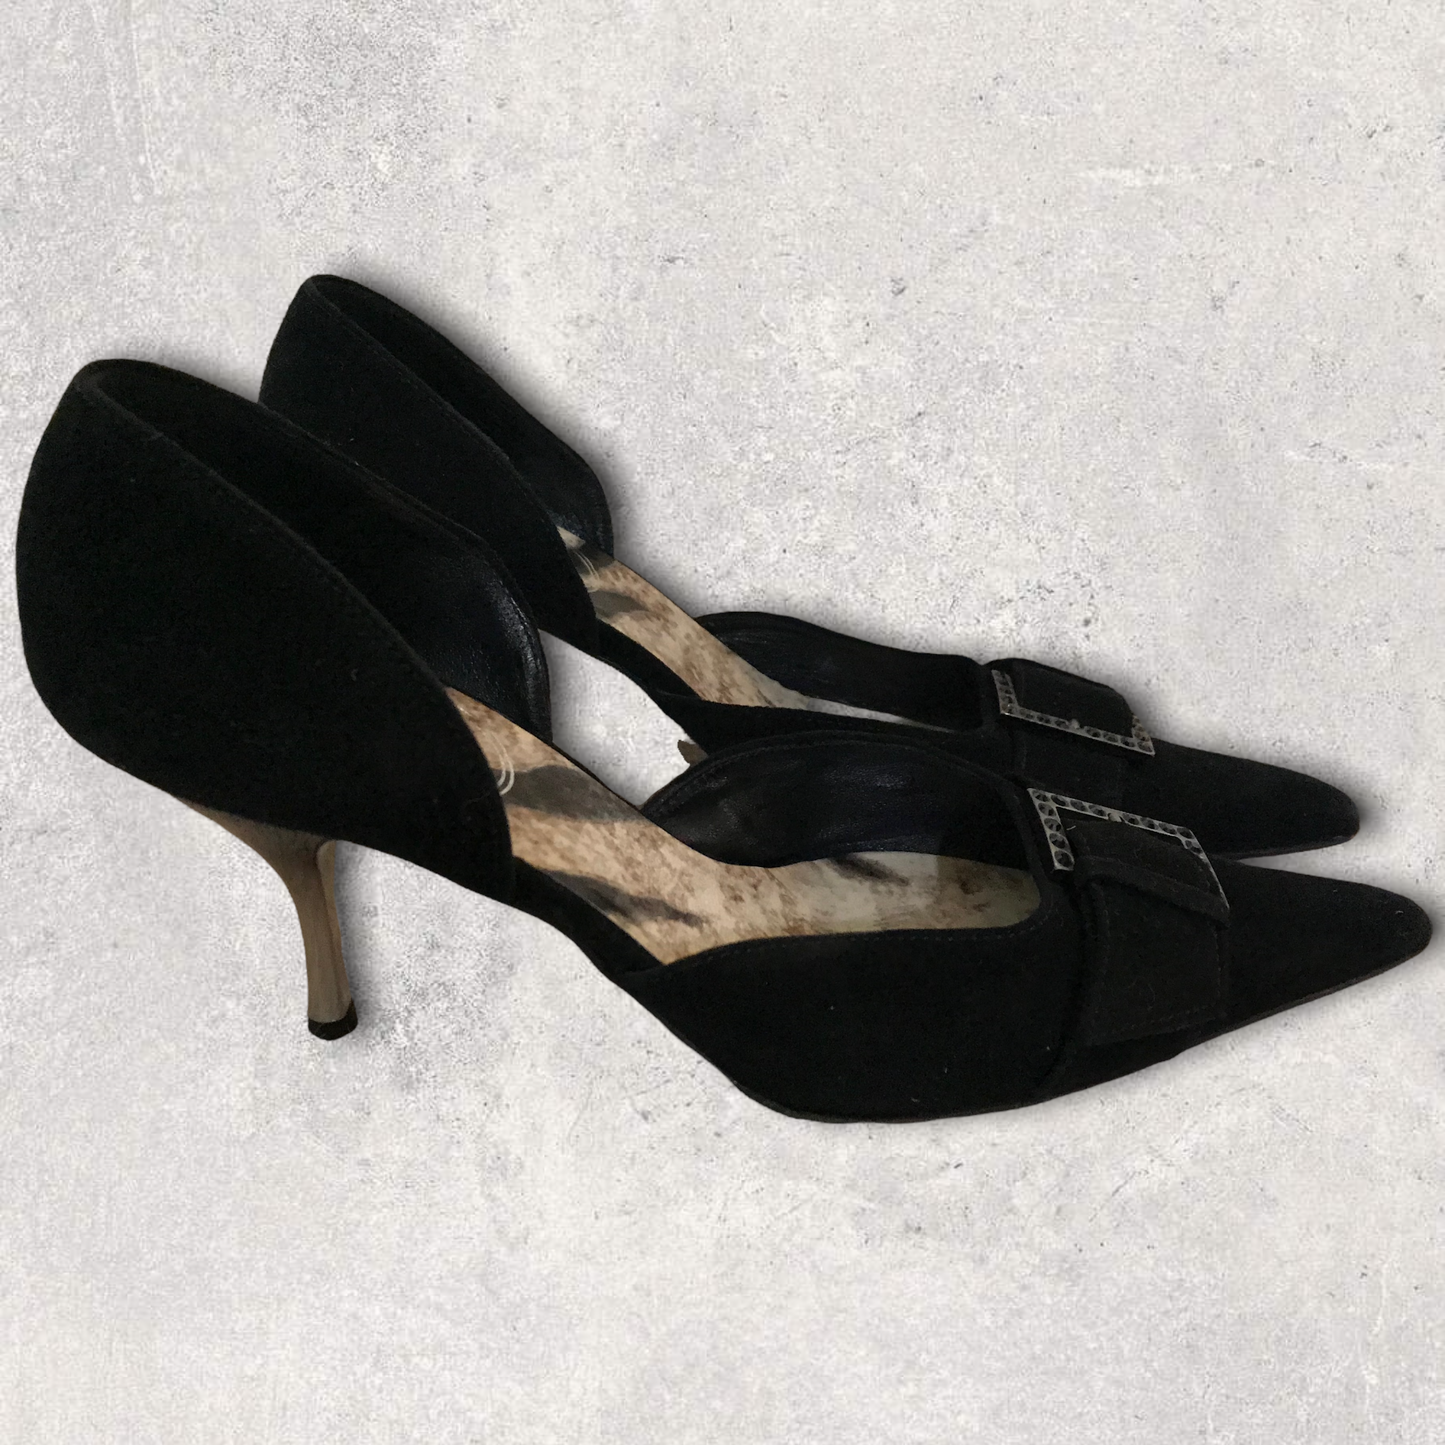 Linea Bruna Black Suede Court Shoes UK 5.5 US 8 EU 39 Timeless Fashions